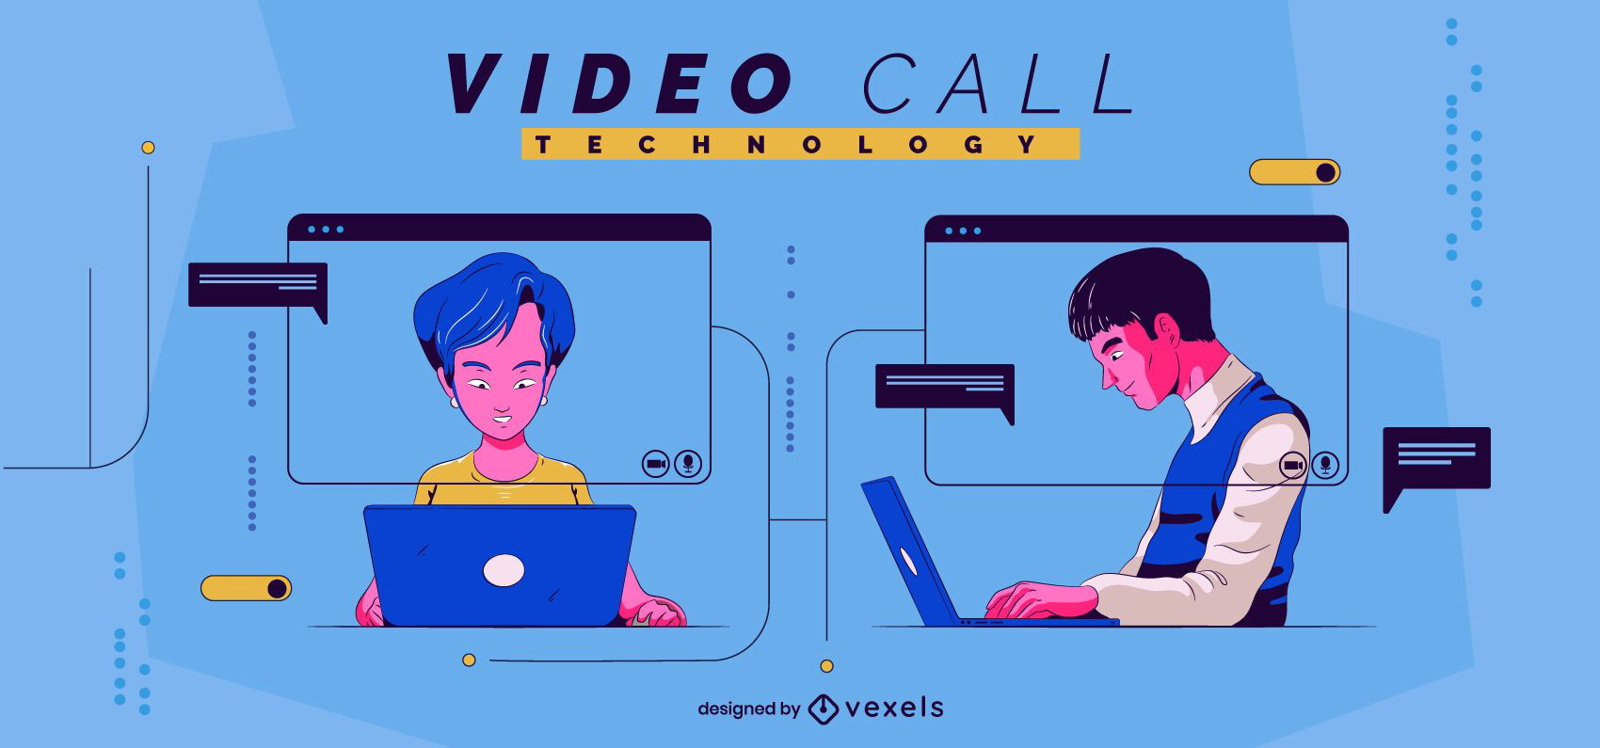 Video call technology illustration